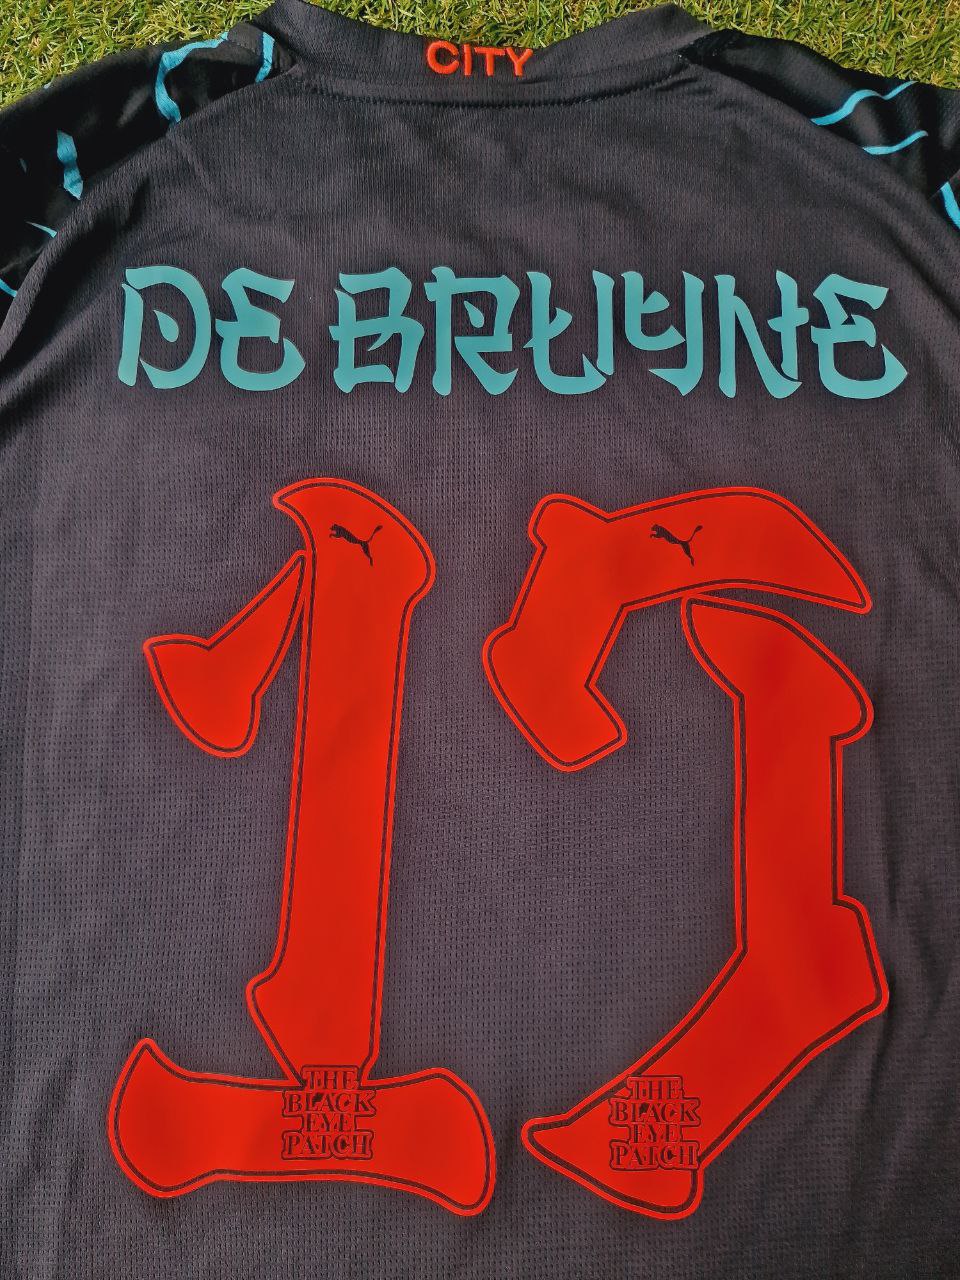 Kevin De Bruyne Manchester City Football Jersey.